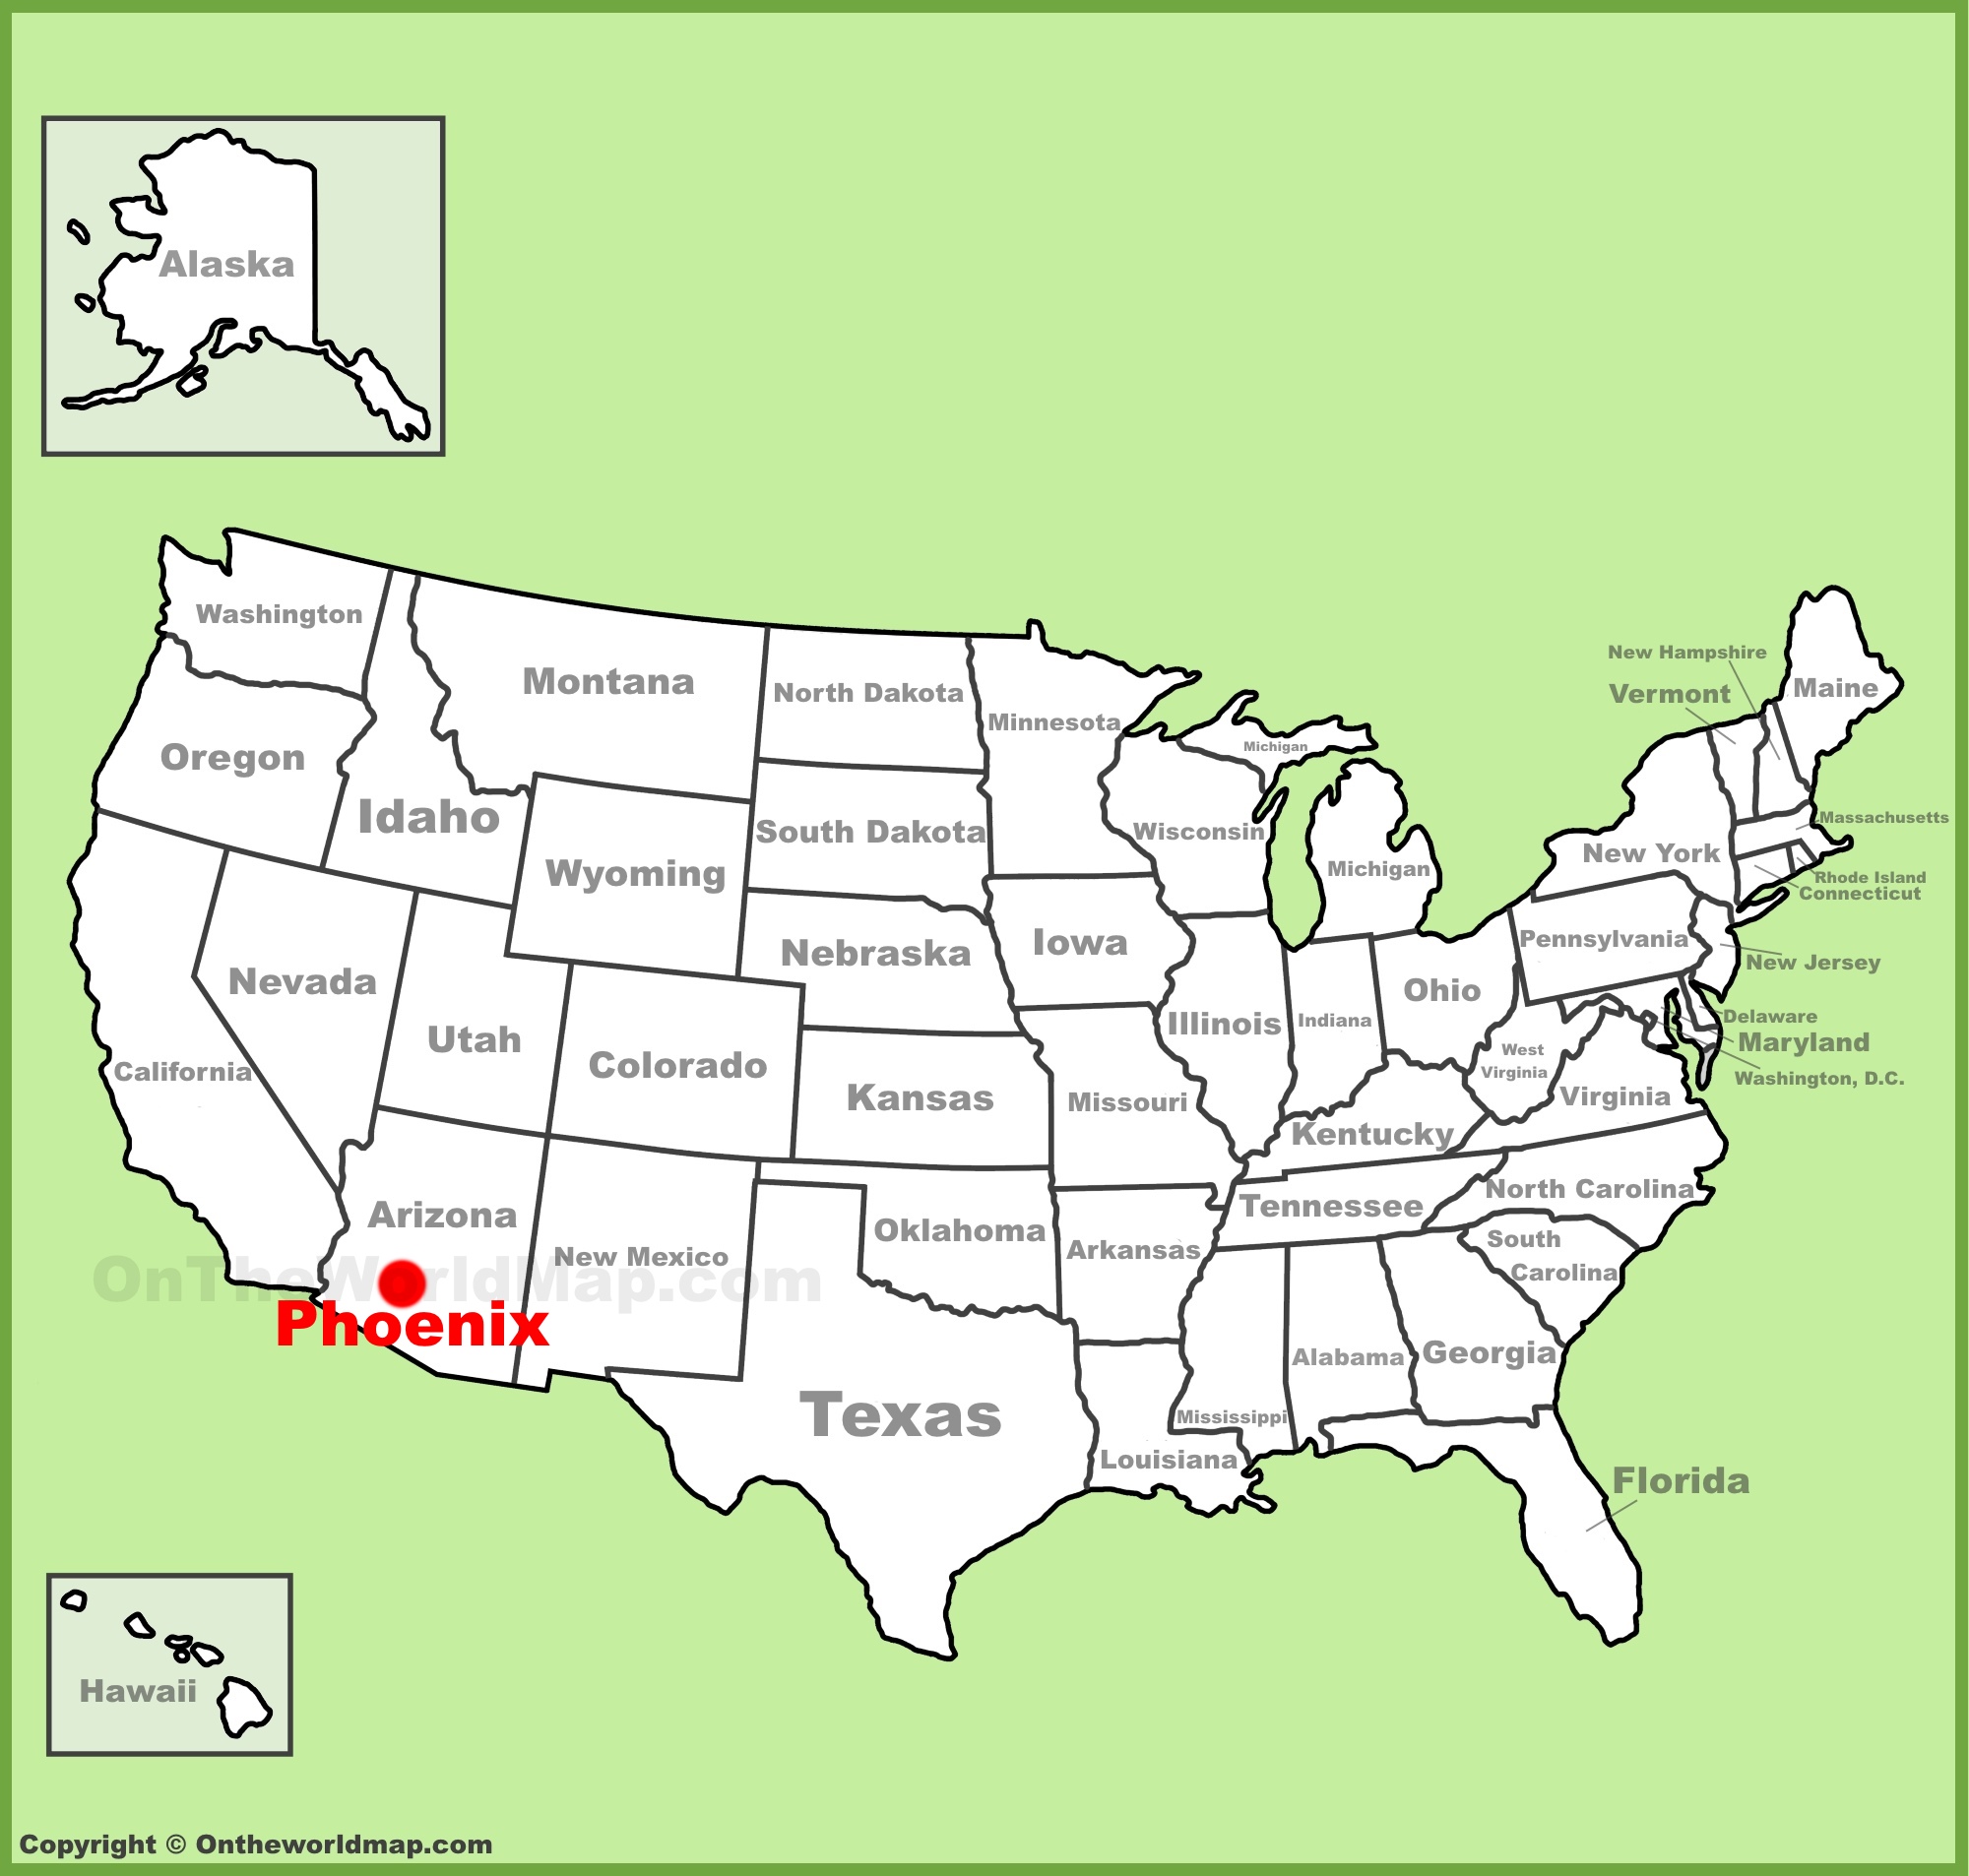 Phoenix location on the U S Map Ontheworldmap com